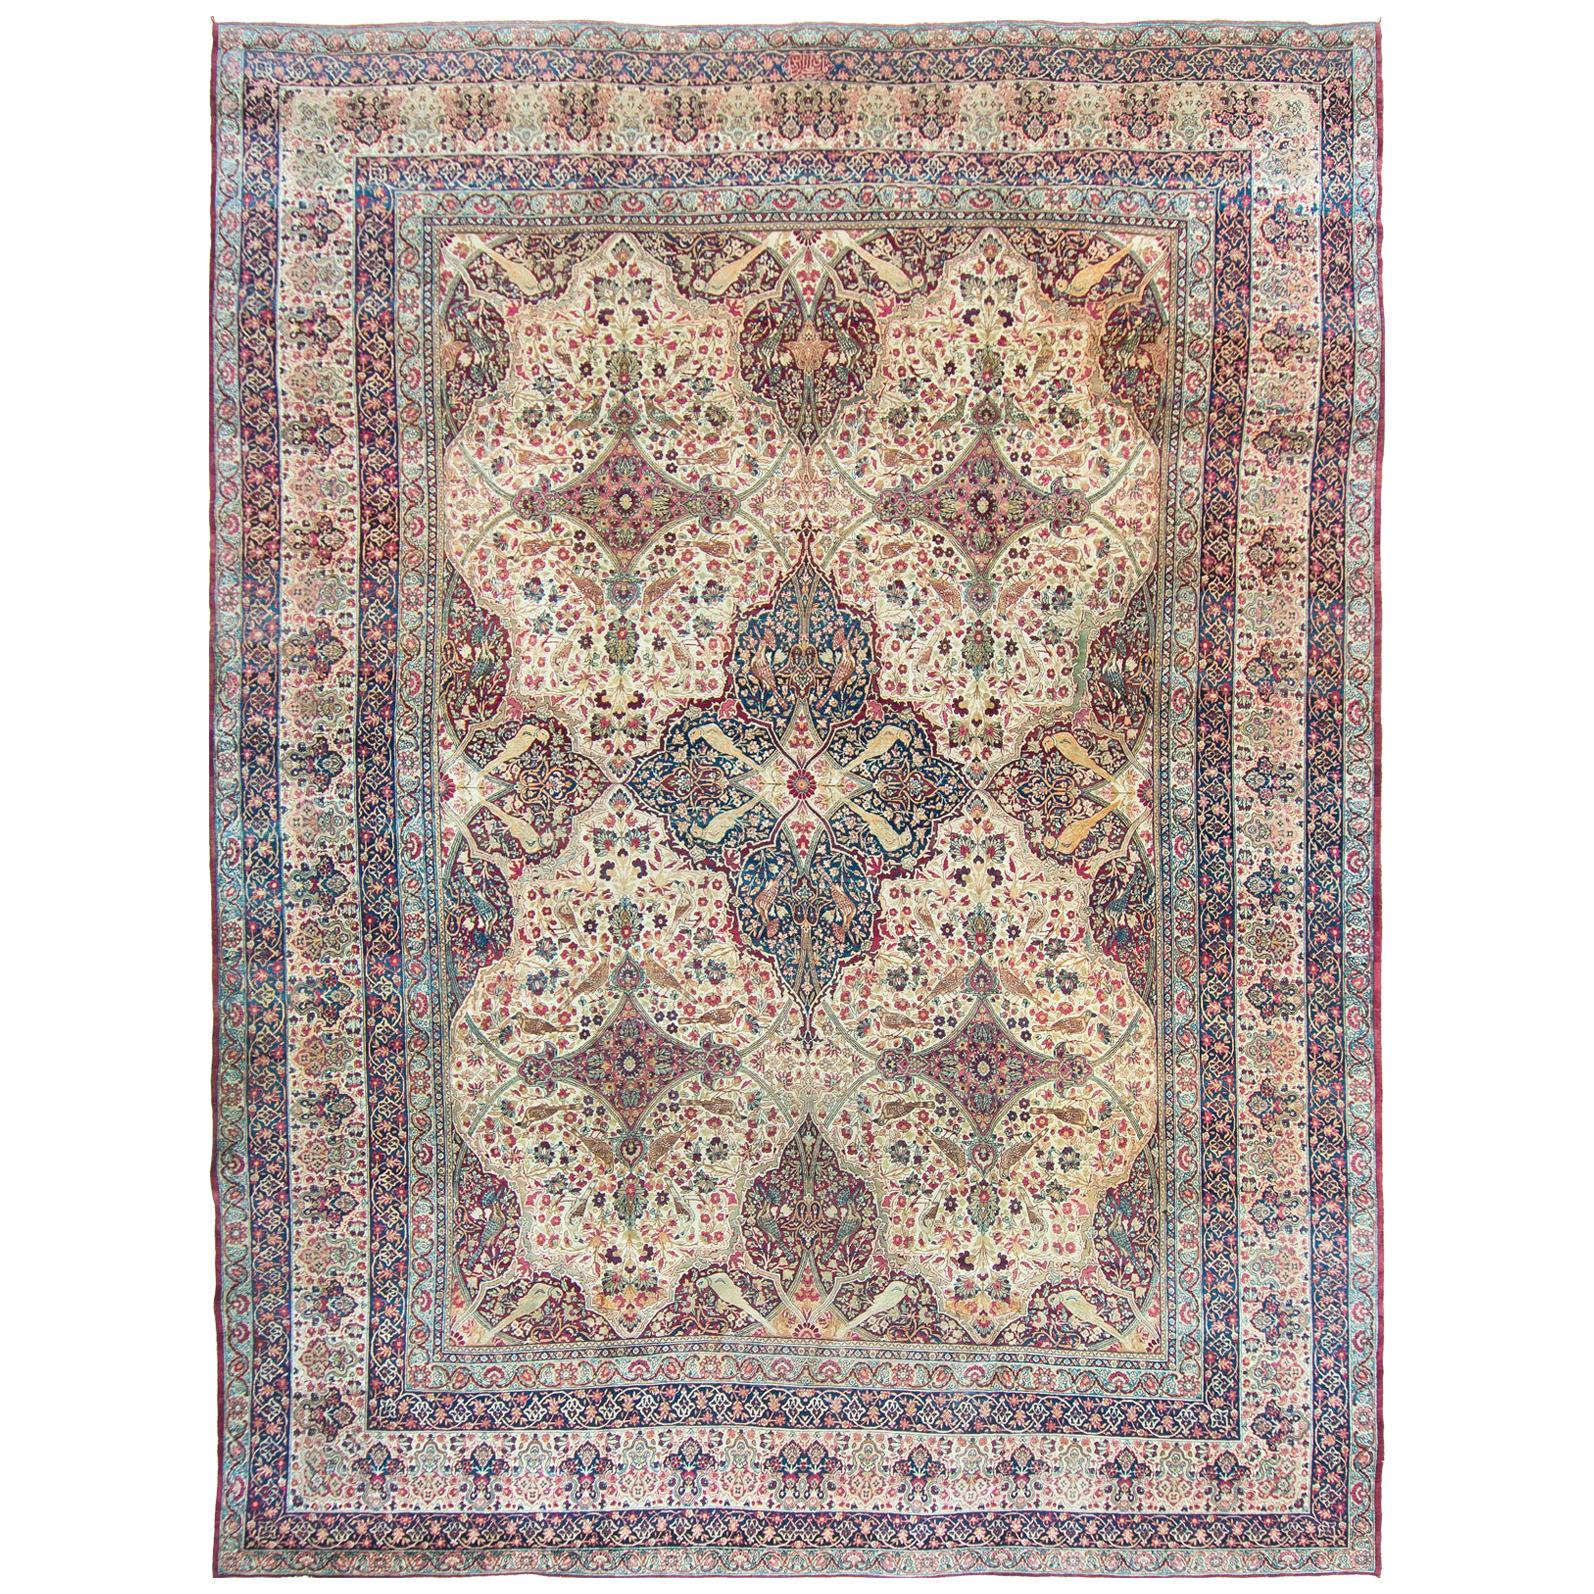 How do I identify a Kerman rug?